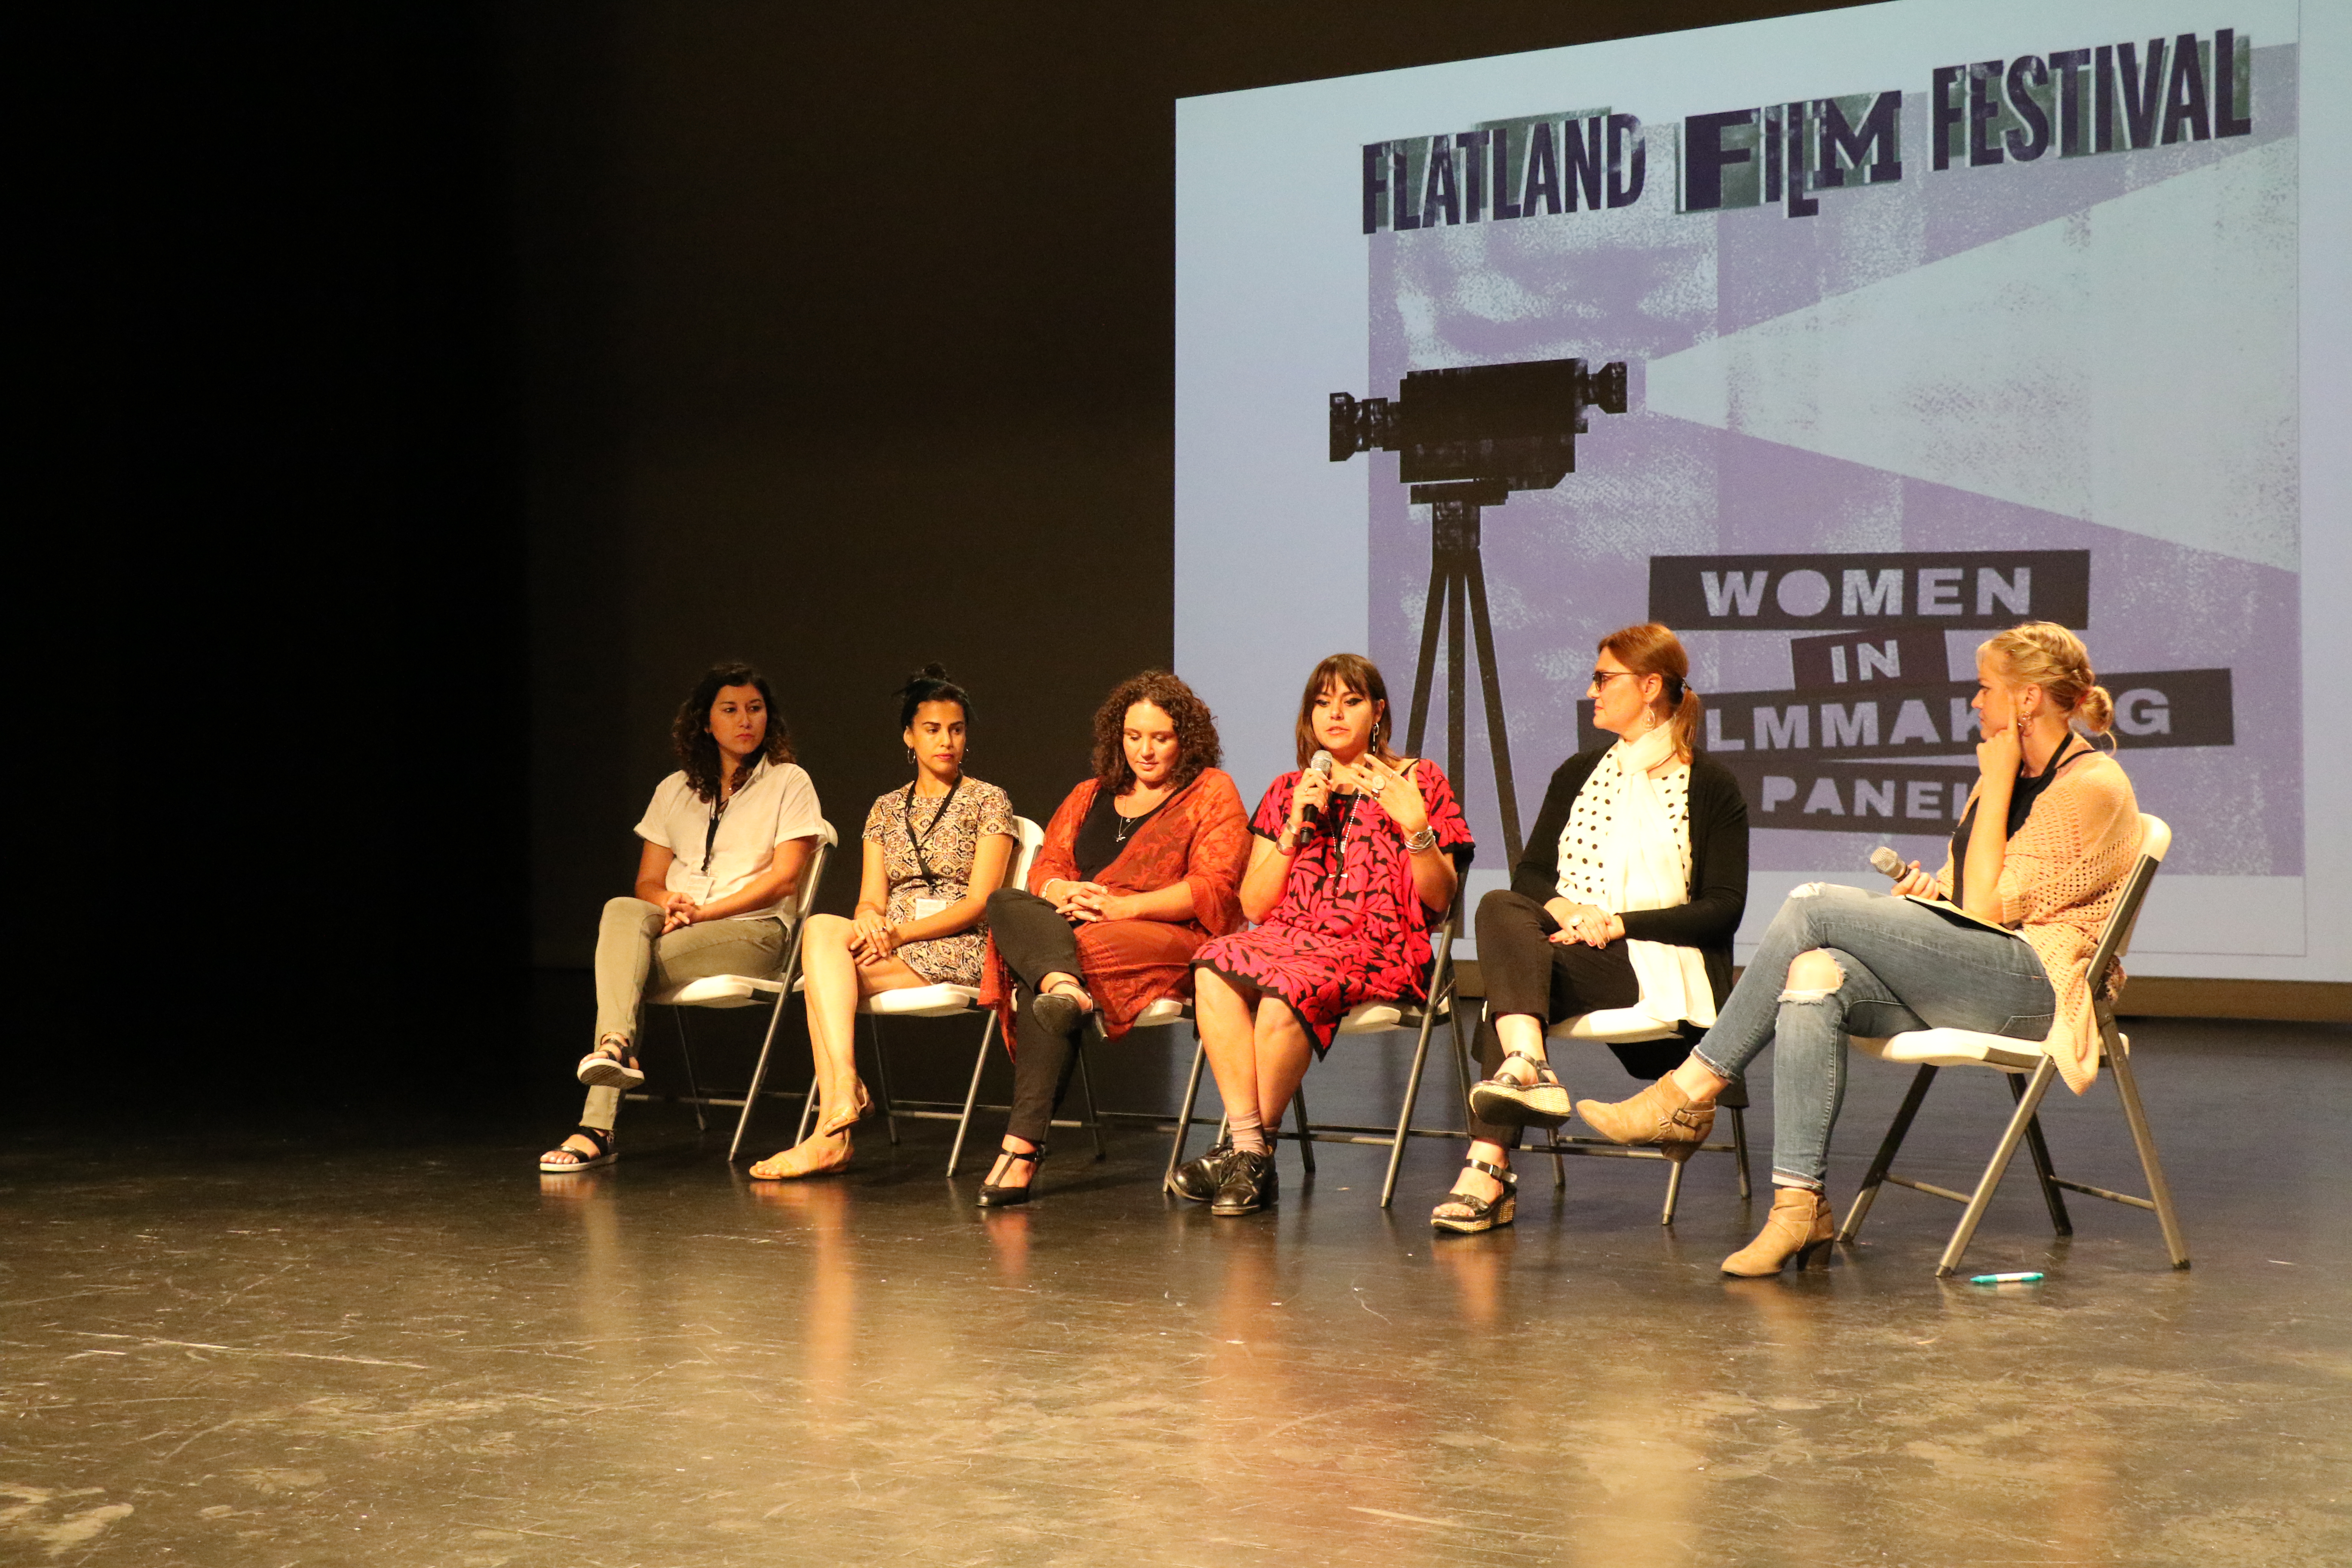 Shorts, feature films screened at Flatland Film Festival